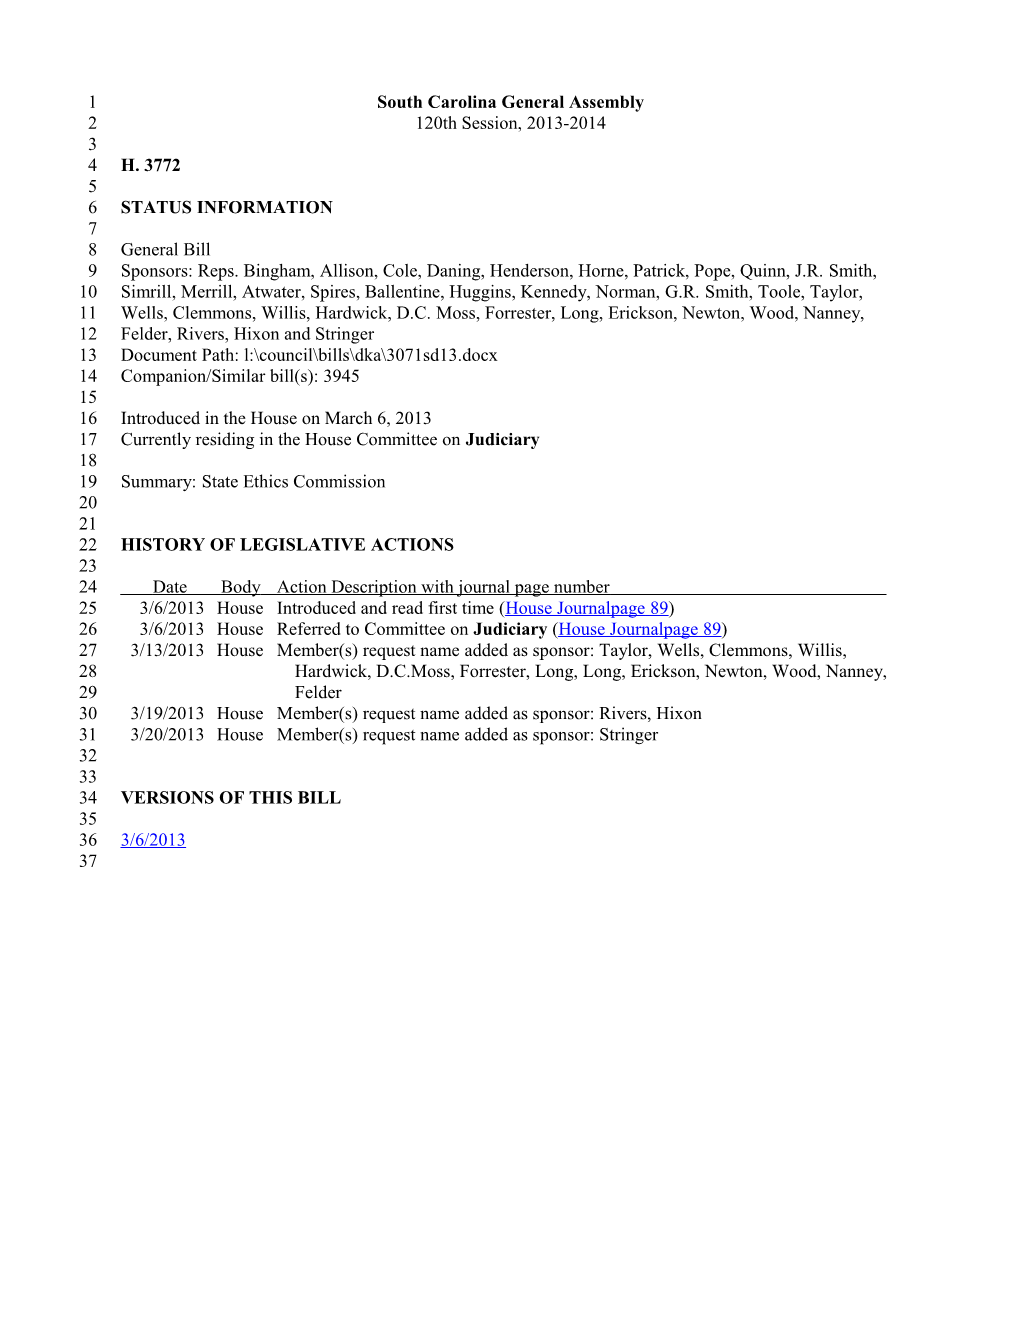 2013-2014 Bill 3772: State Ethics Commission - South Carolina Legislature Online